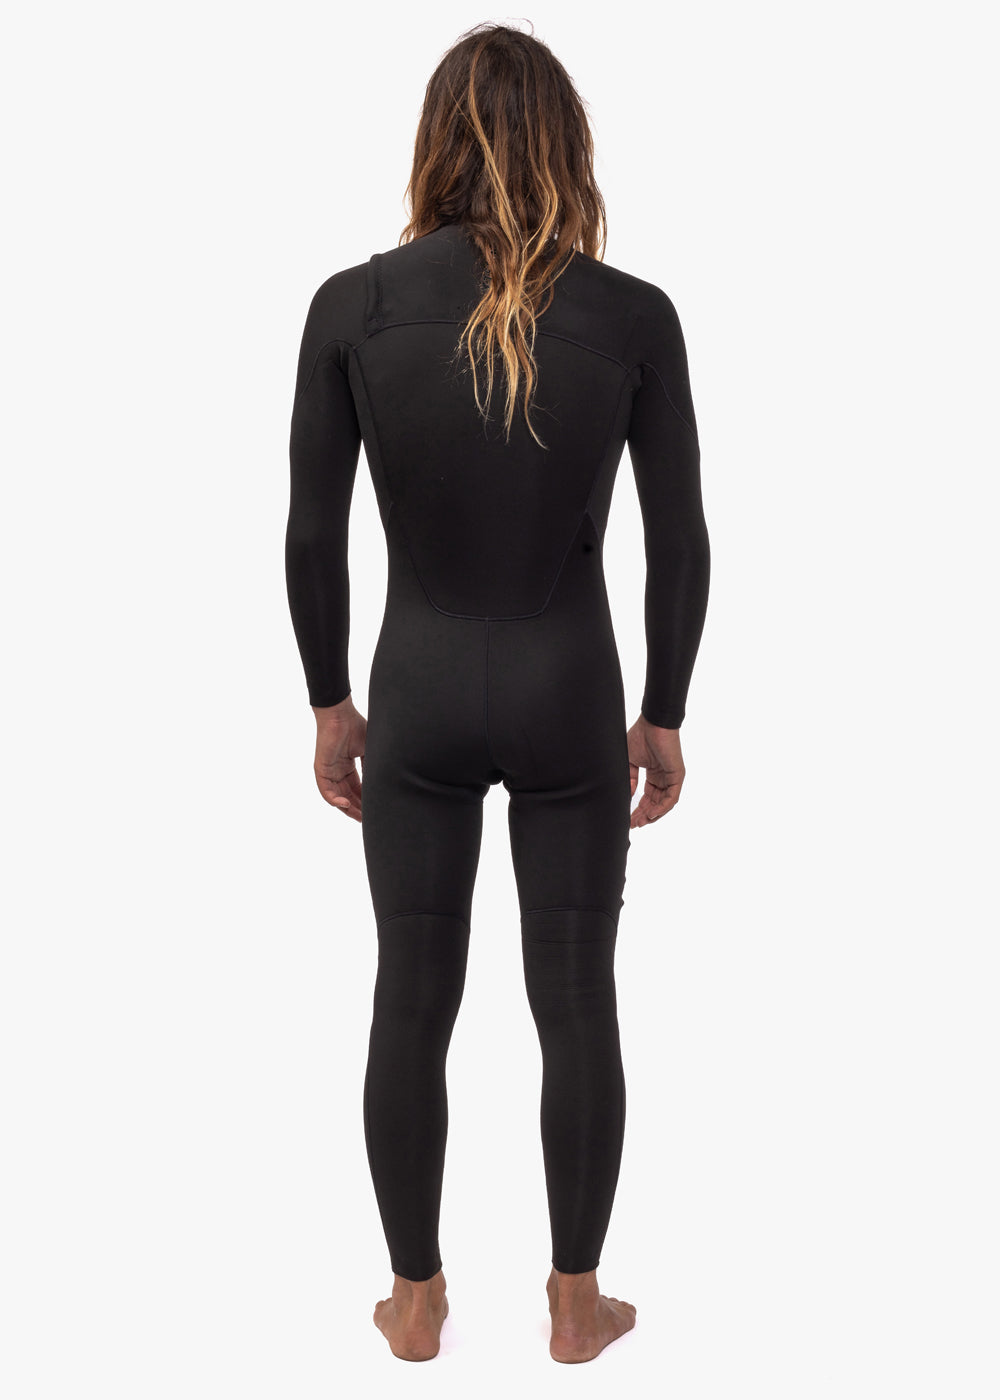 Vissla Men's Wetsuit | 7 Seas 3-2 Chest Zip Full Suit No Logos 